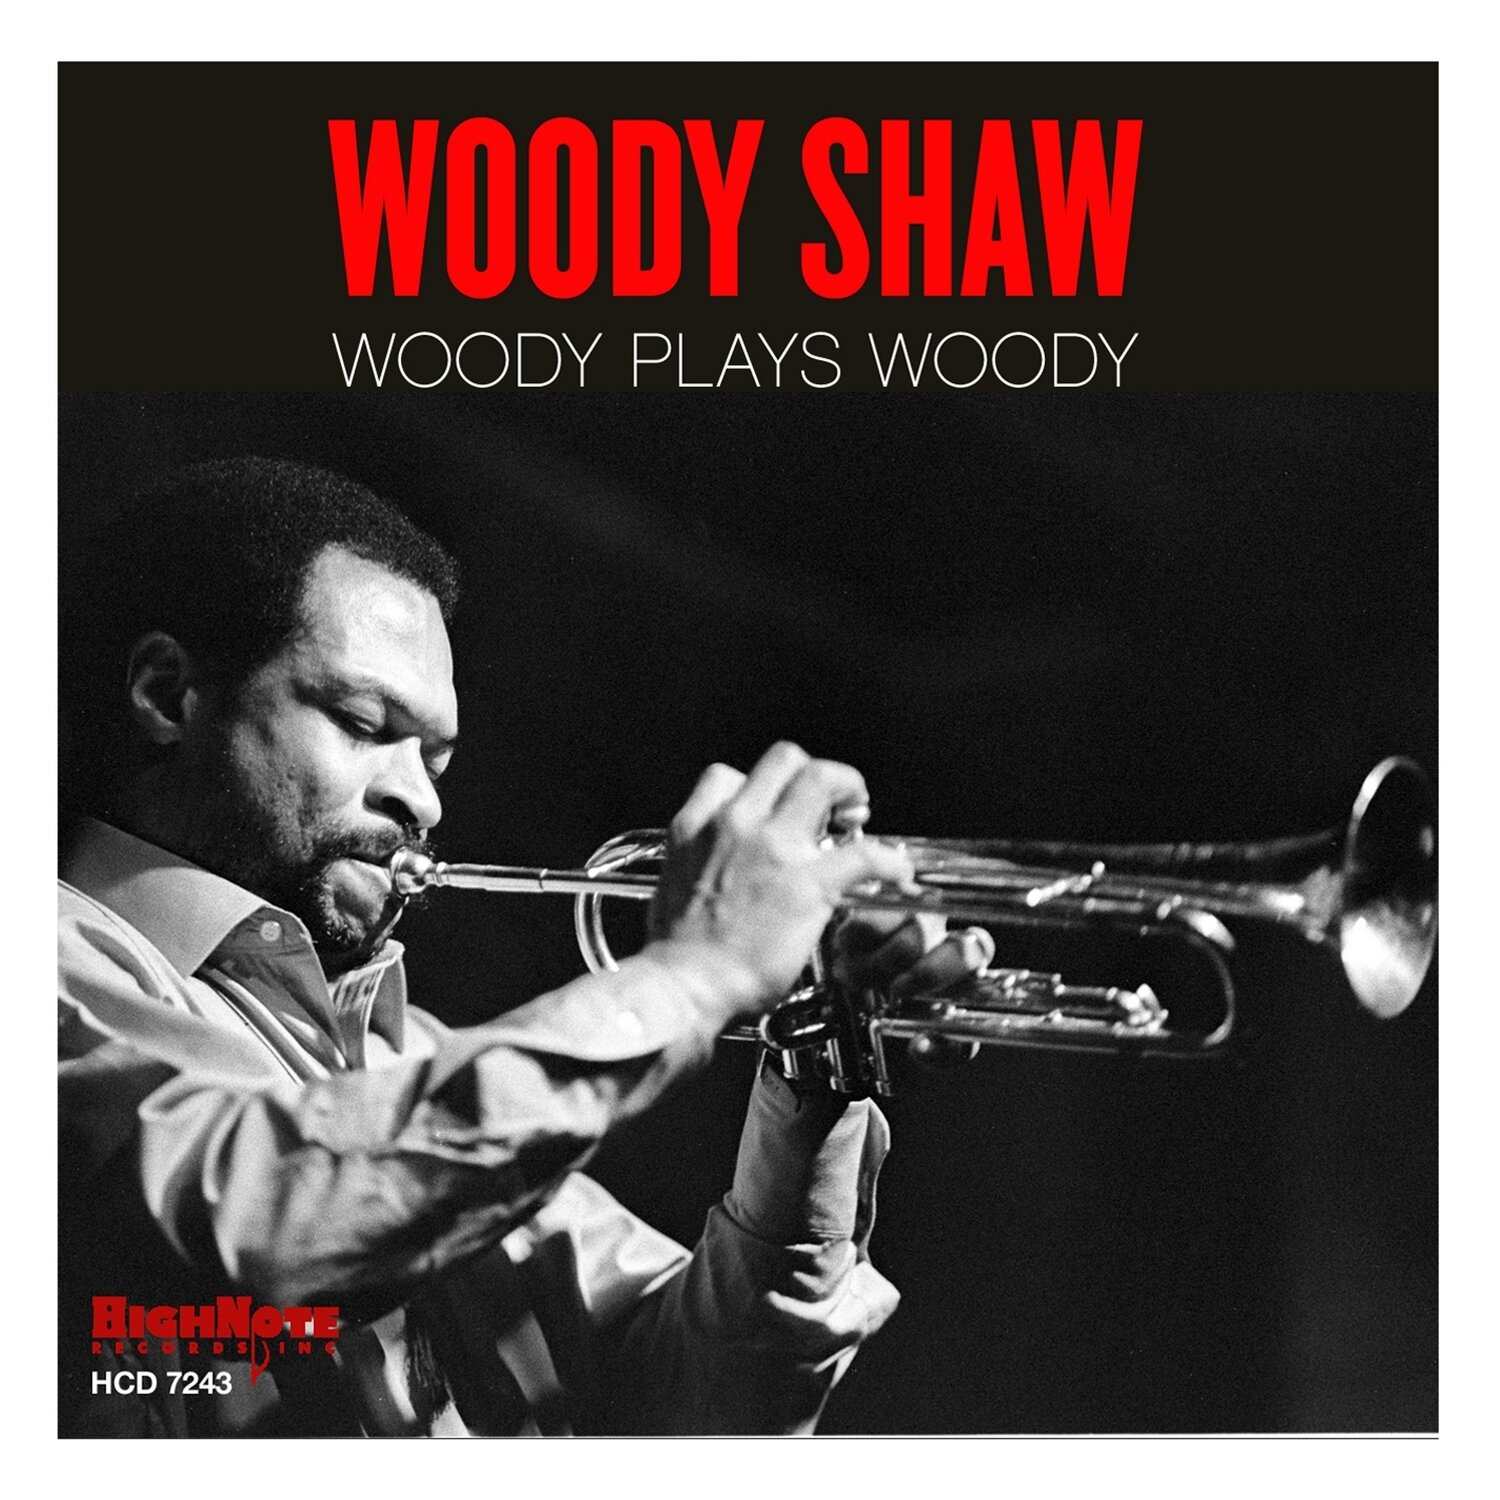 WOODY SHAW - Woody Play Woody